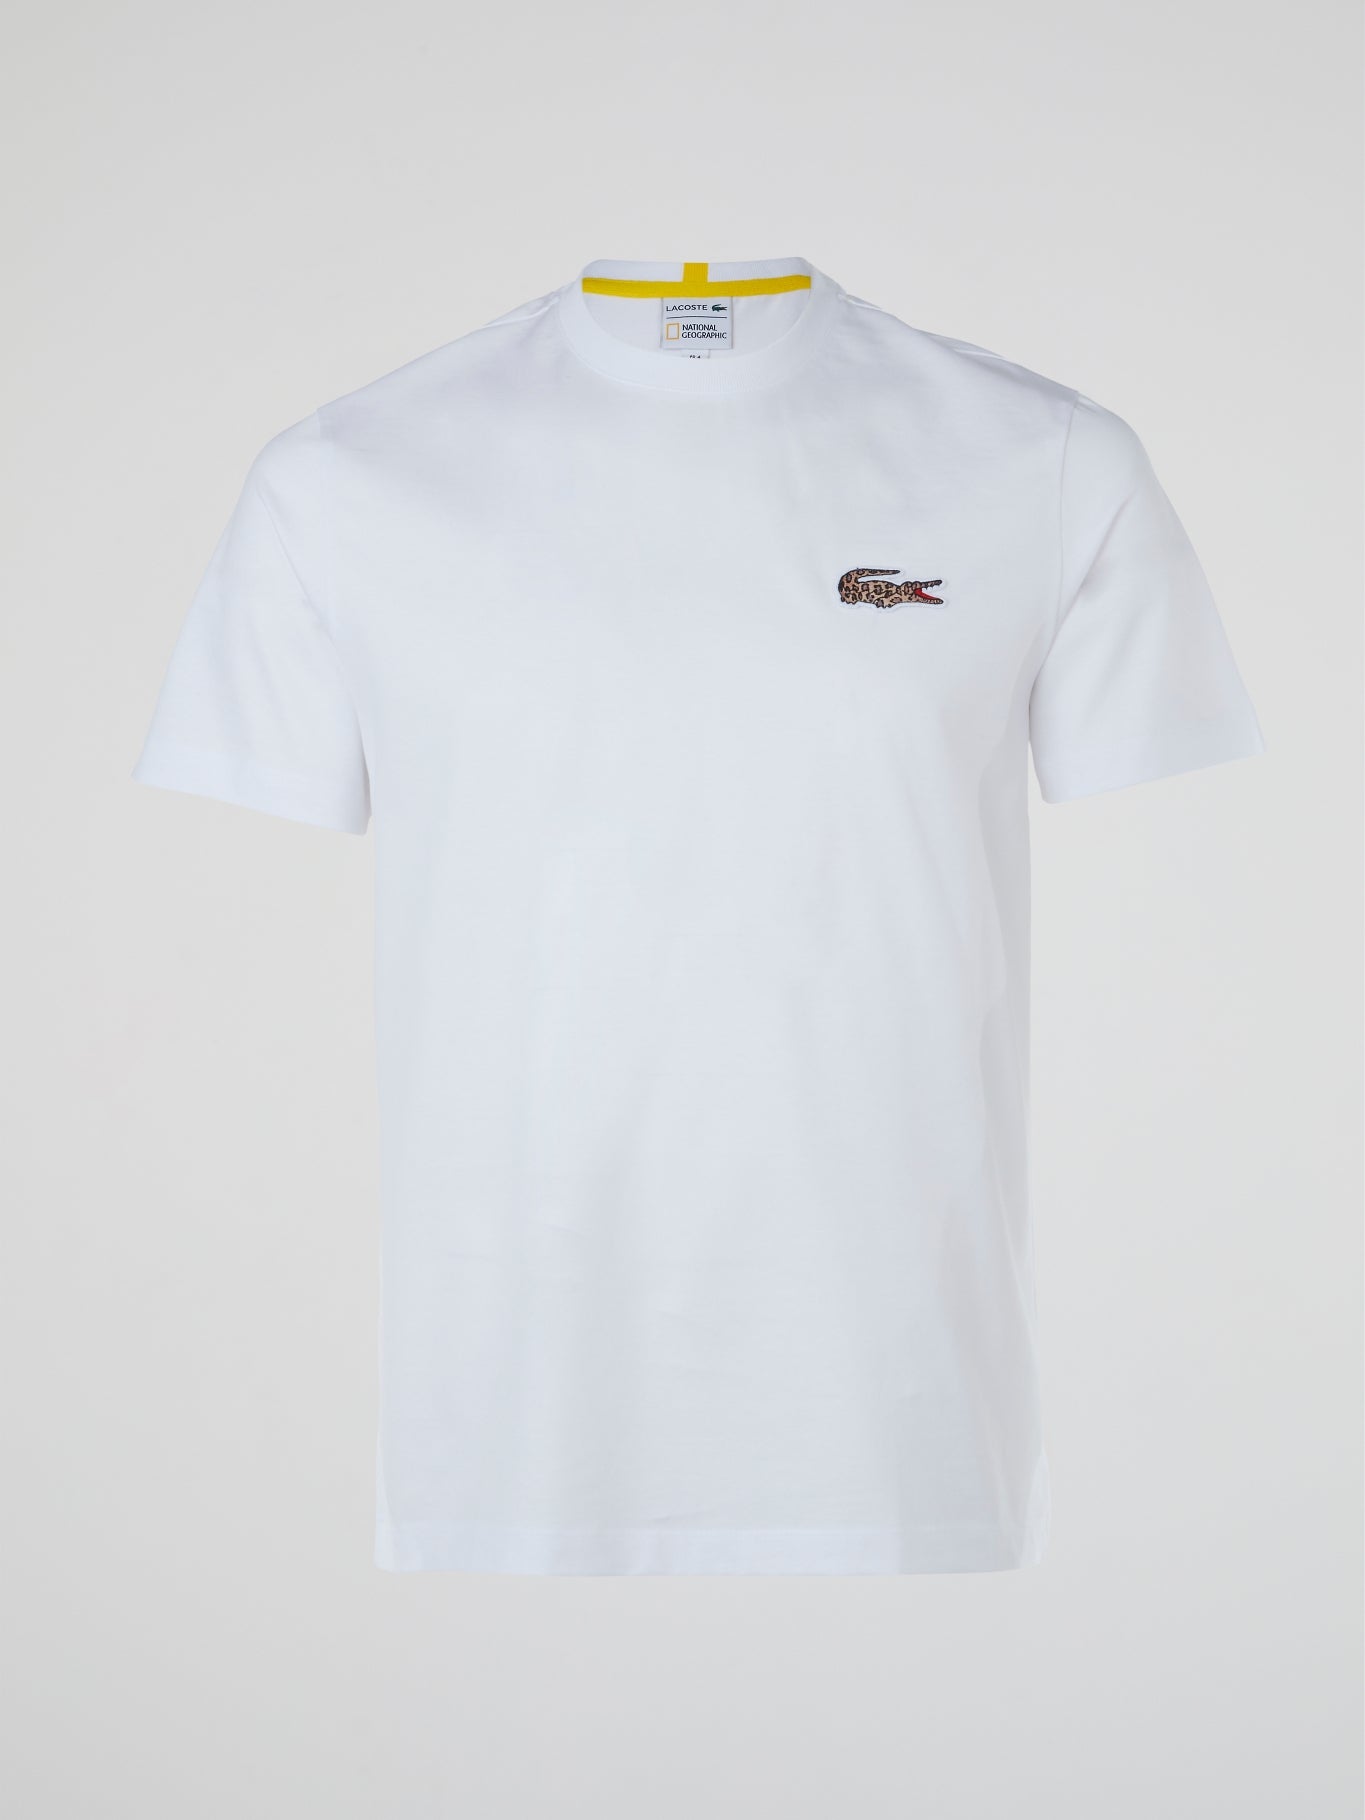 White Logo Crewneck T-Shirt Maison-B-More Global Store